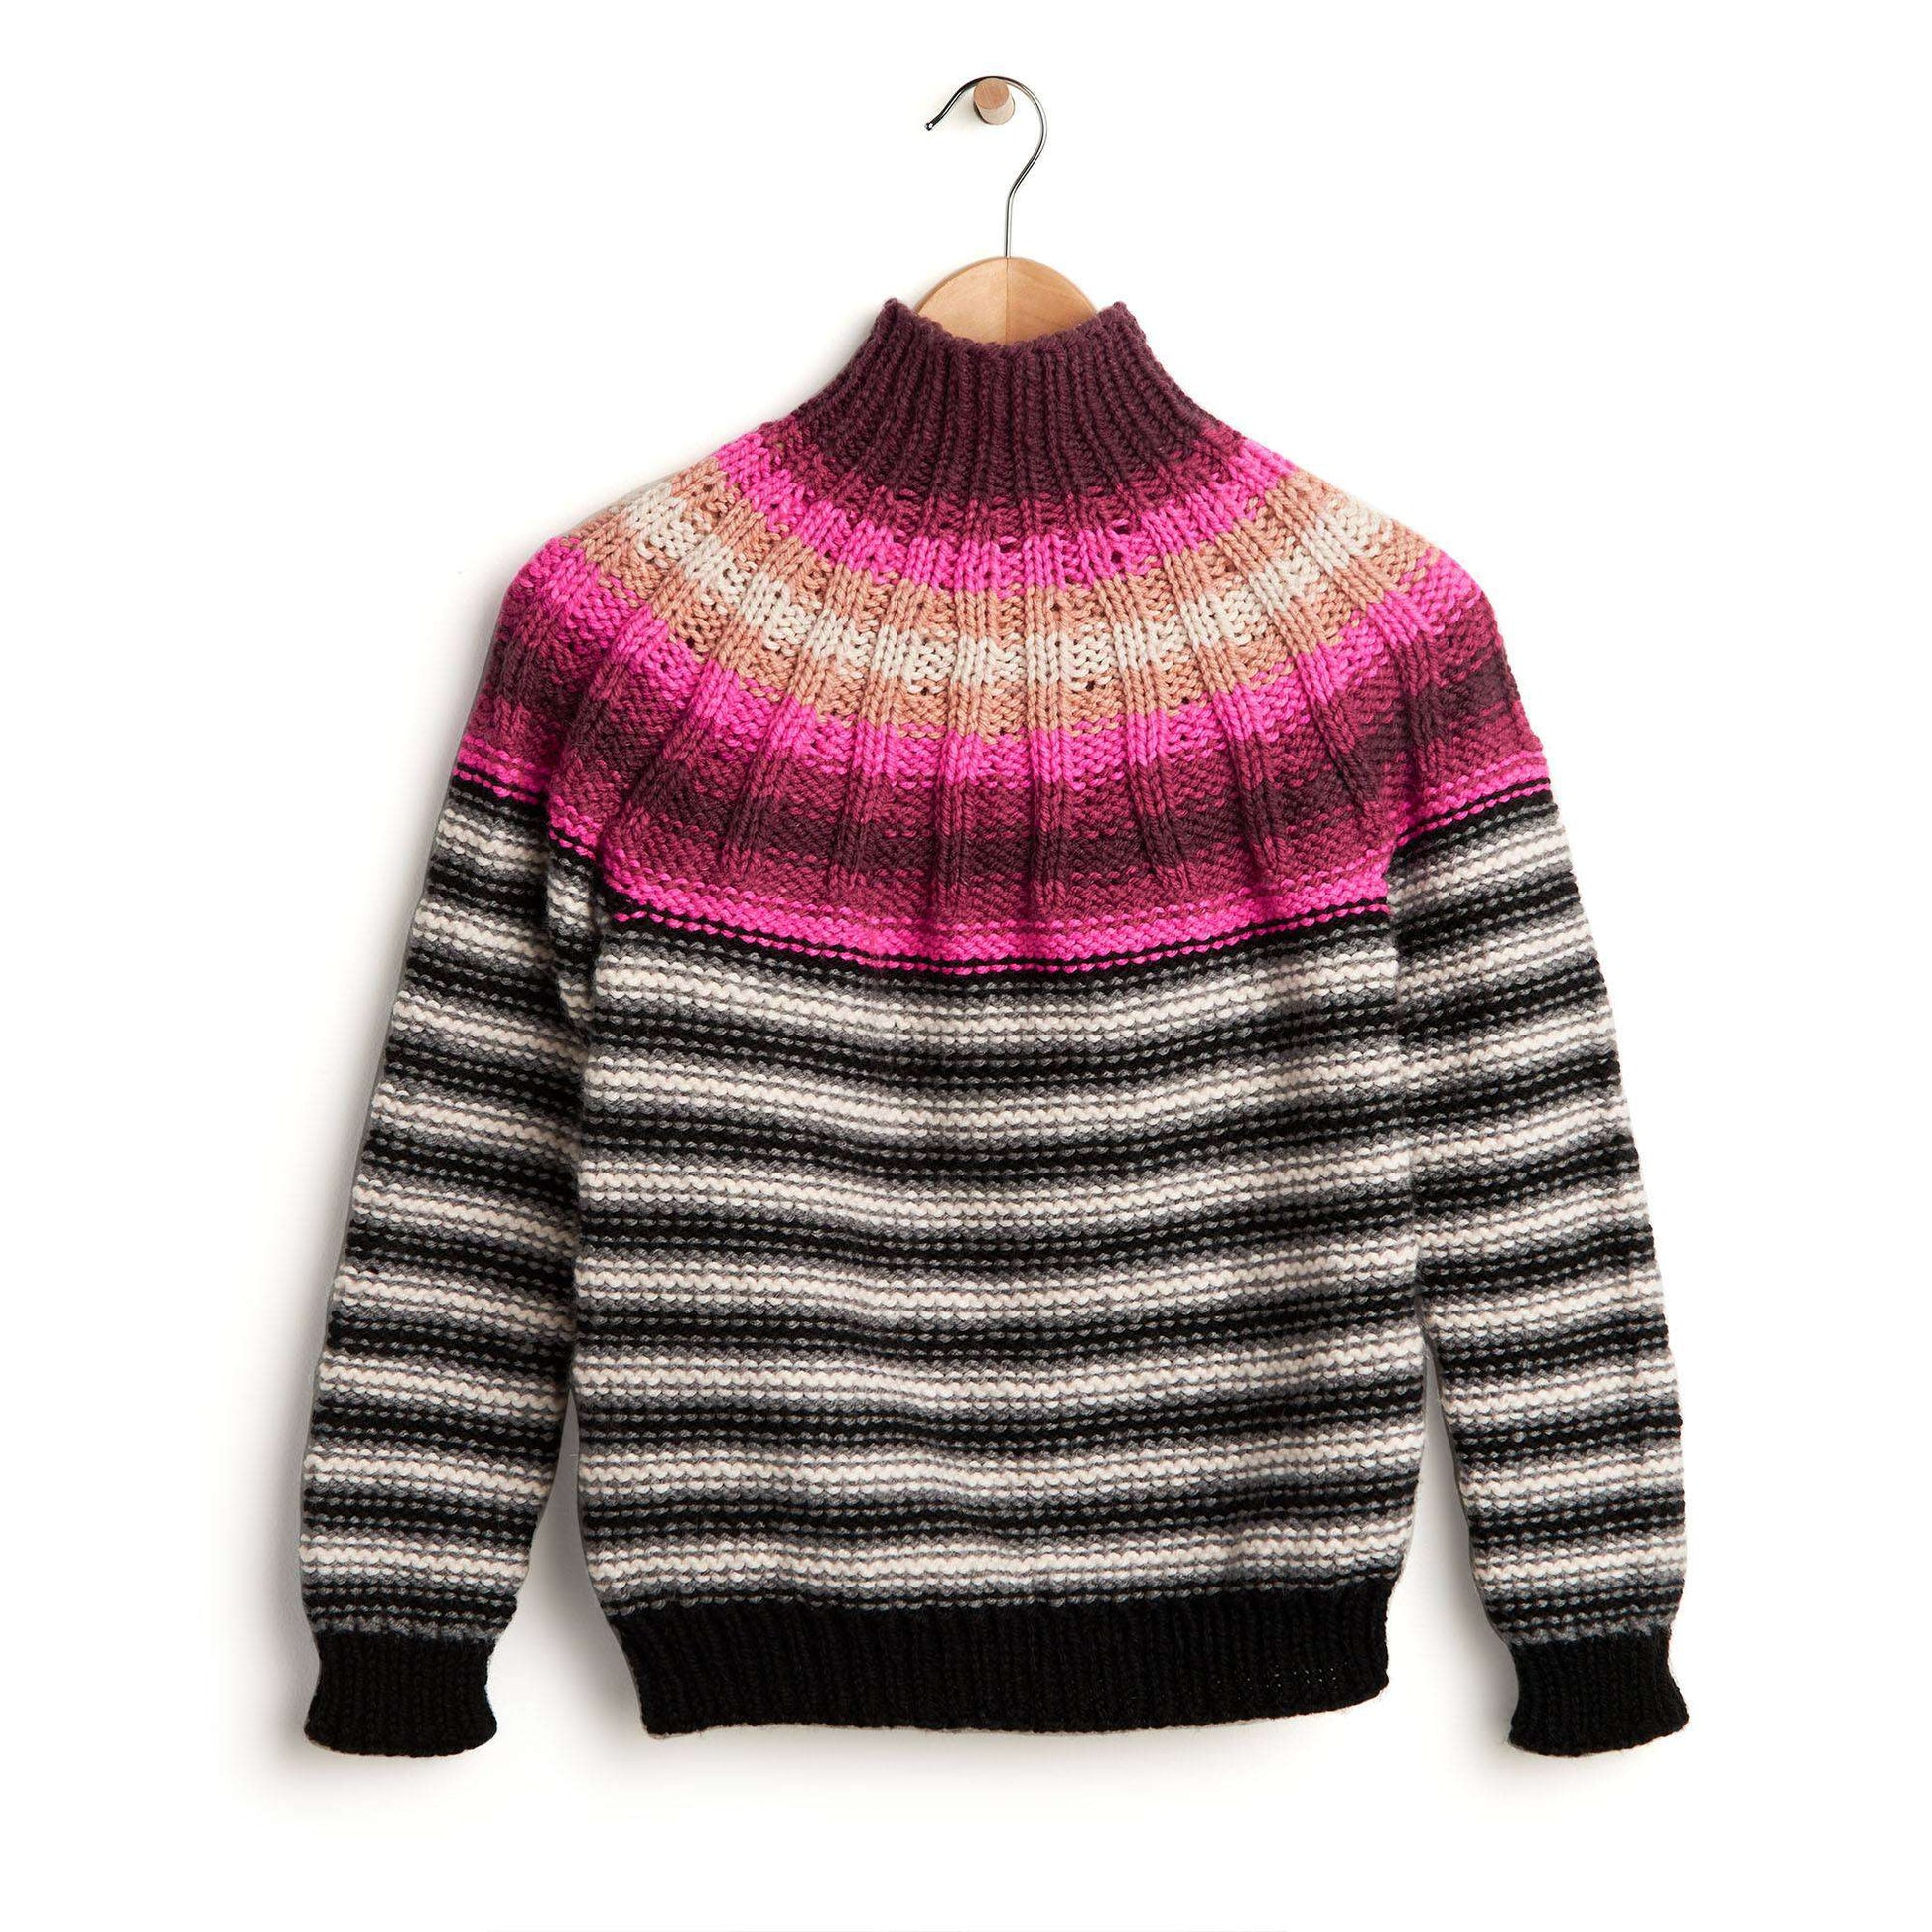 Free Caron Ribs & Stripes Knit Yoke Sweater Pattern